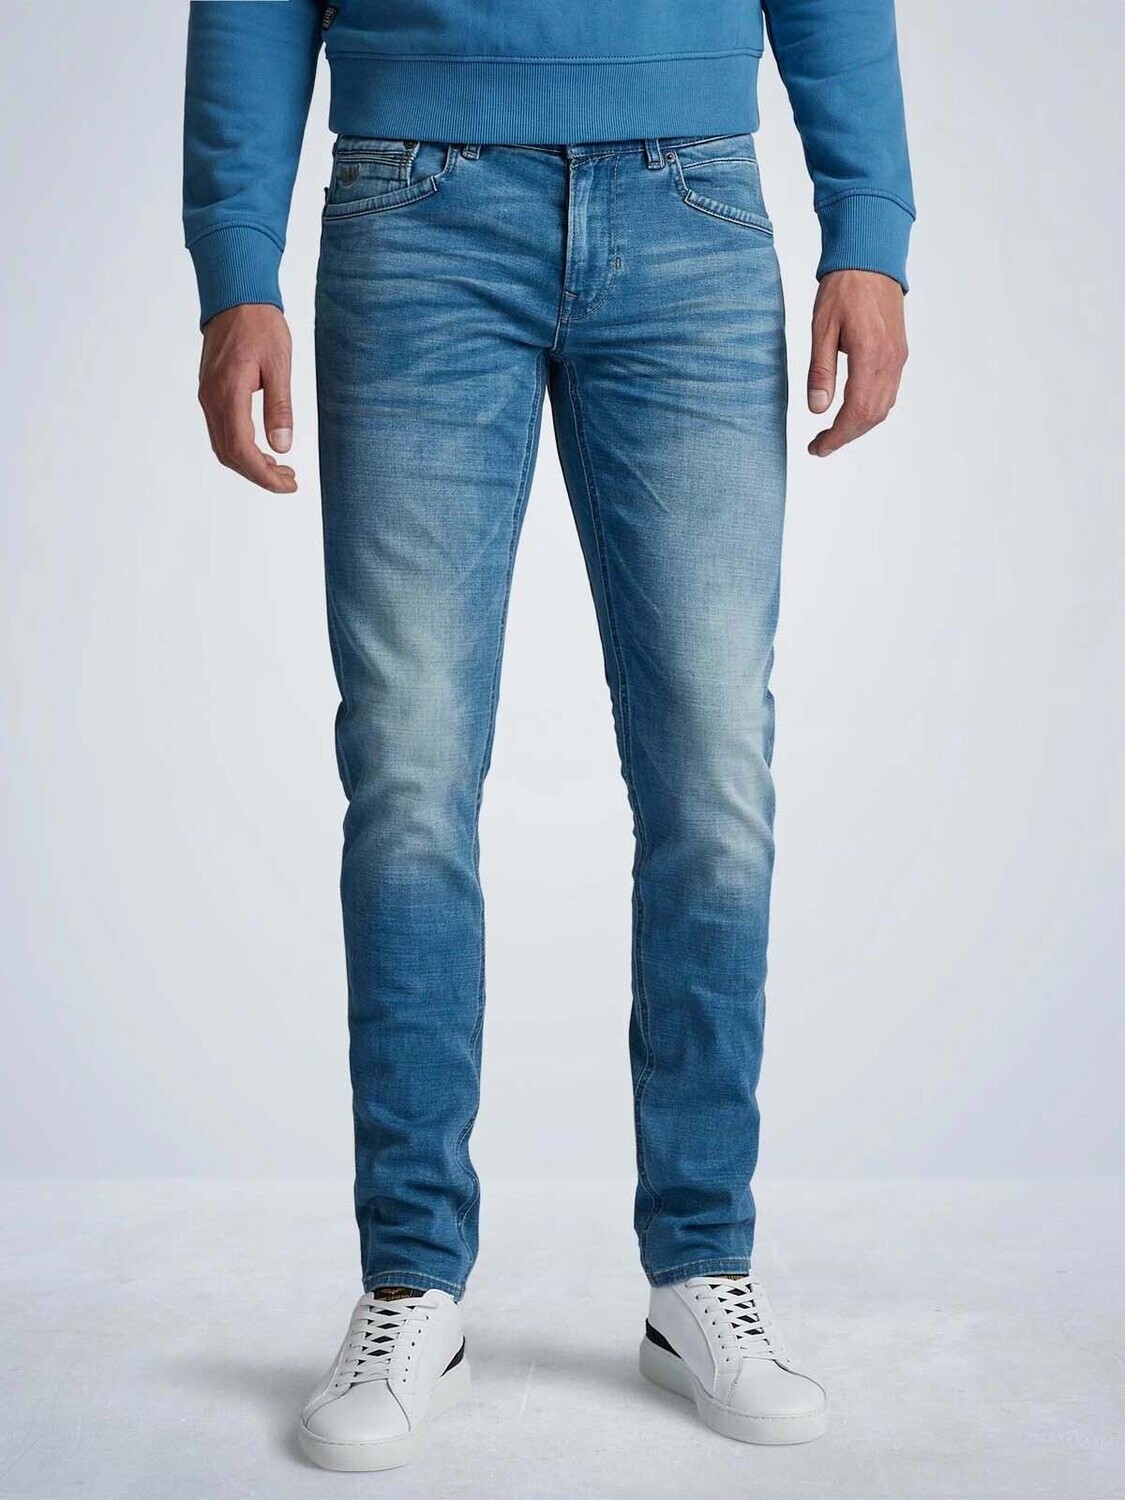 PME Legend | Tailwheel Slim Fit Jeans PTR140-SMB